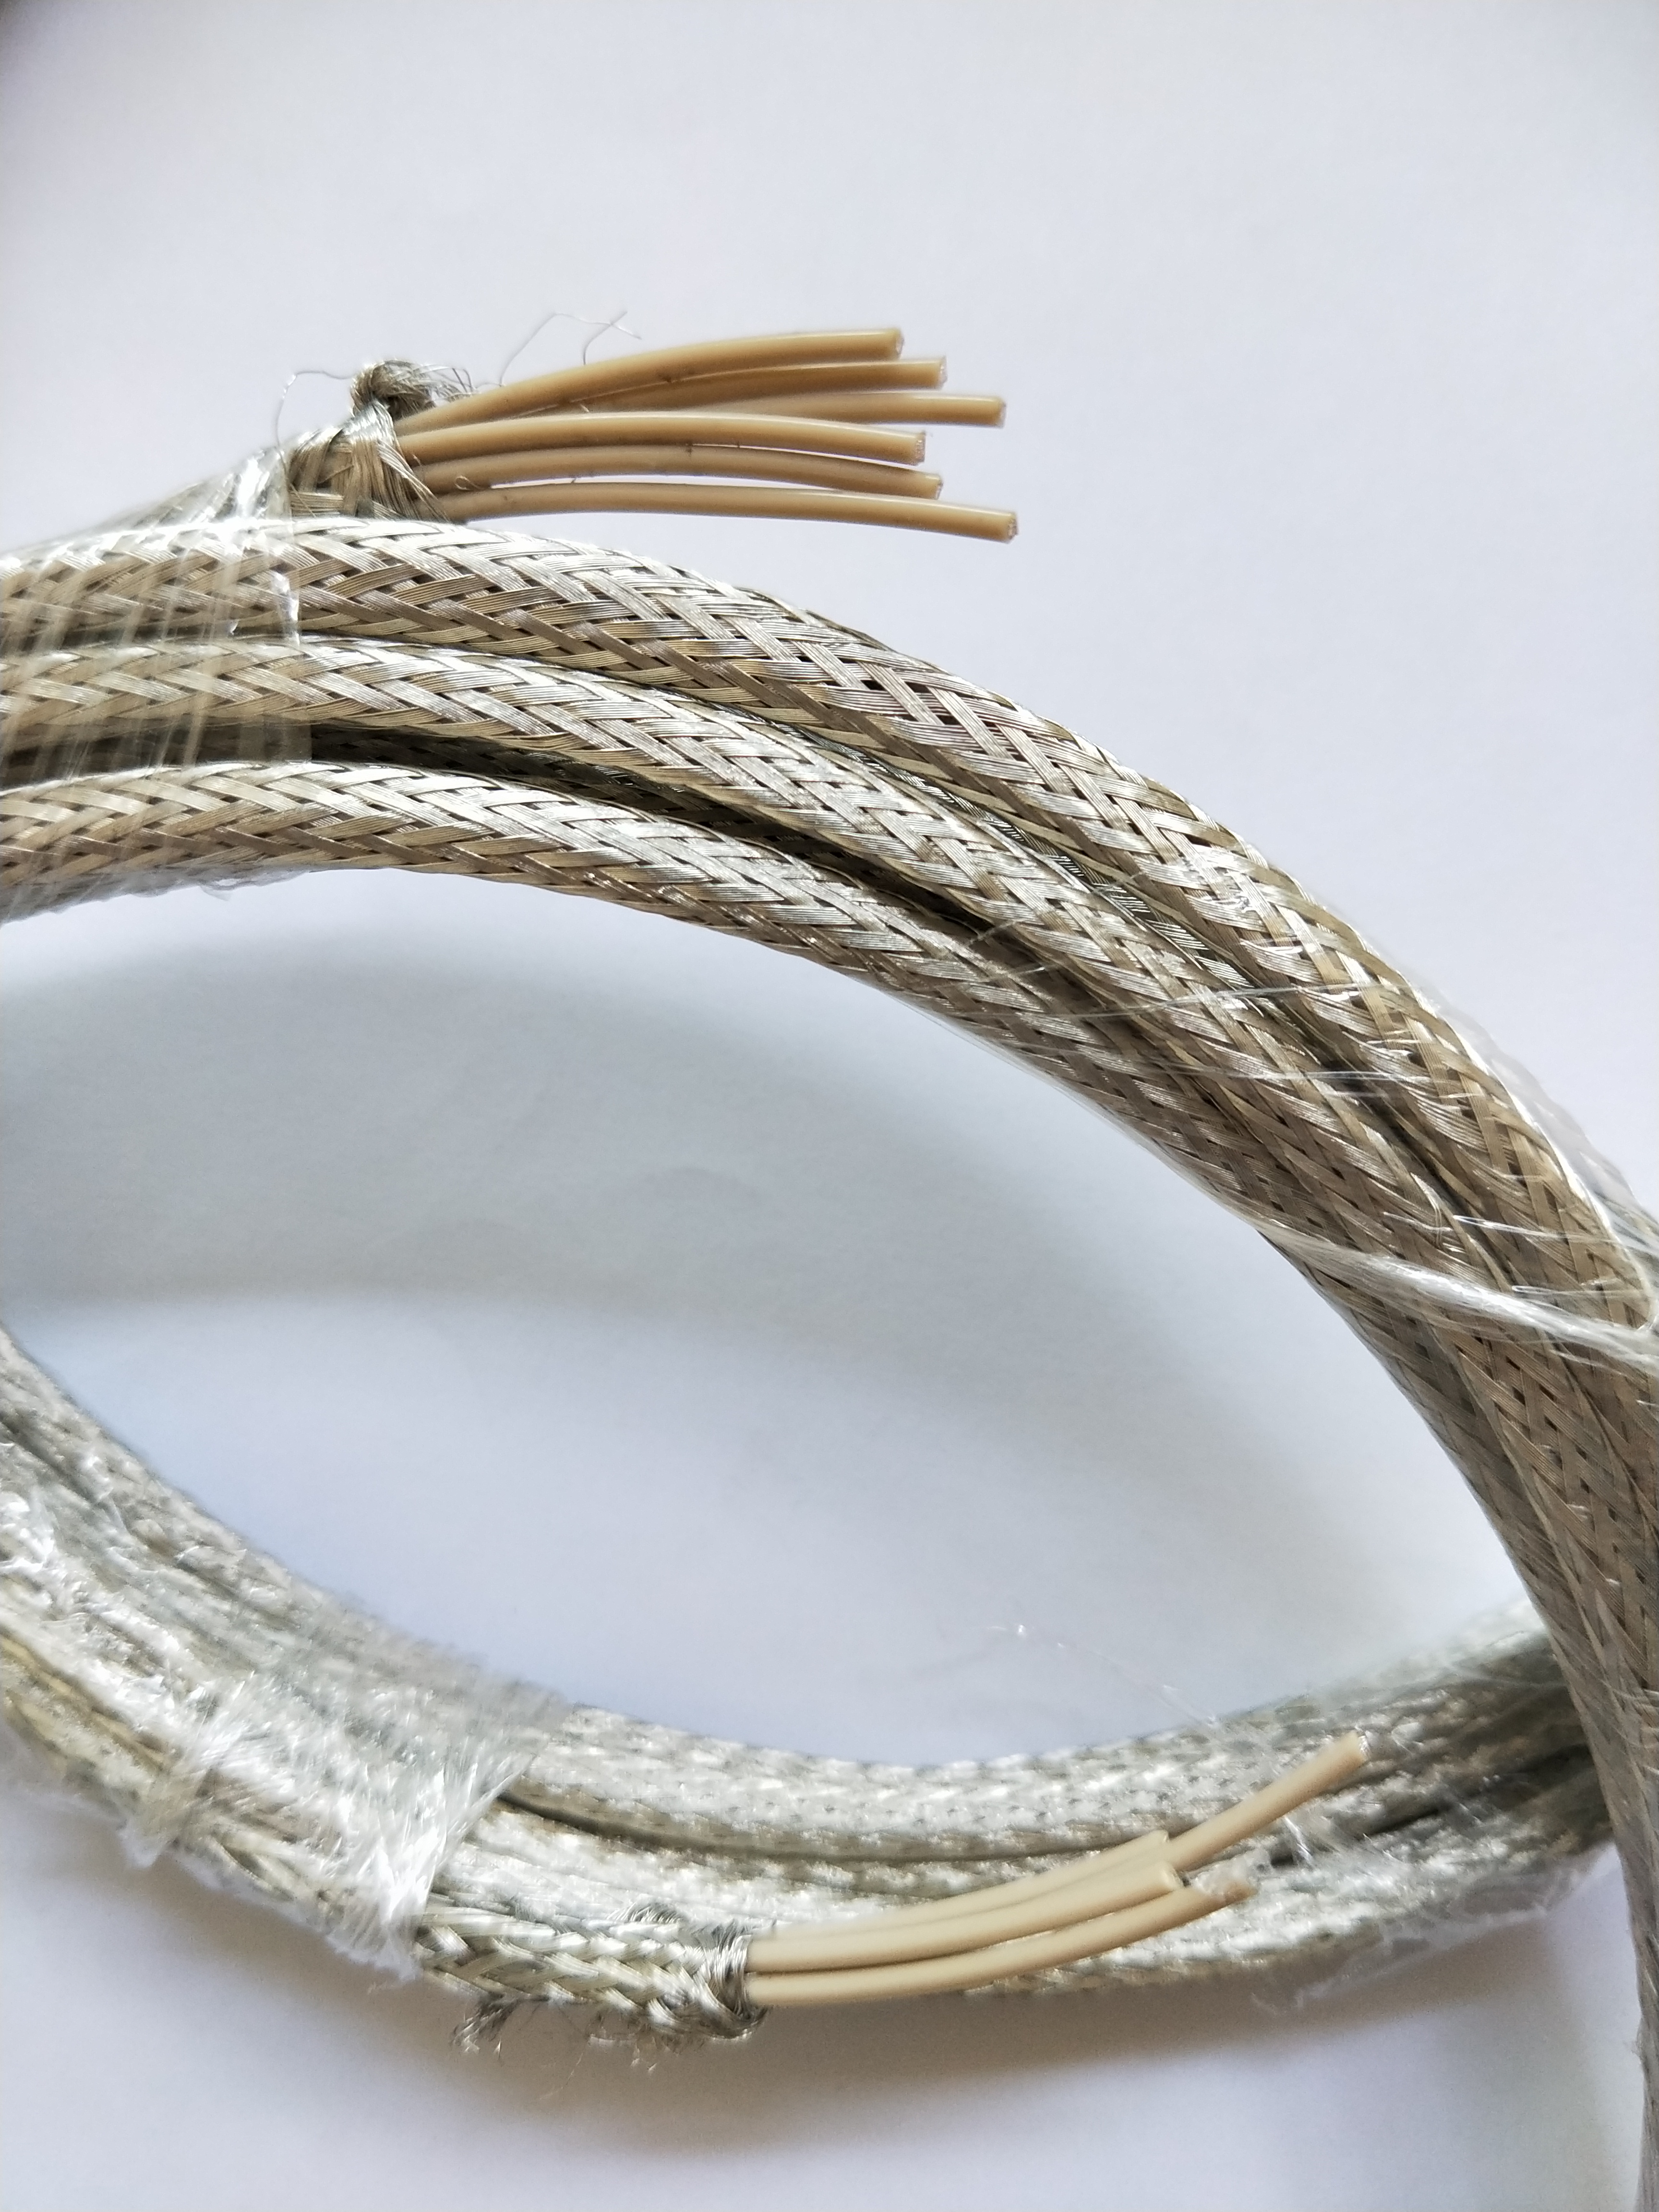 PEEK (Polyetheretherketone) Equipment Wire & Cable